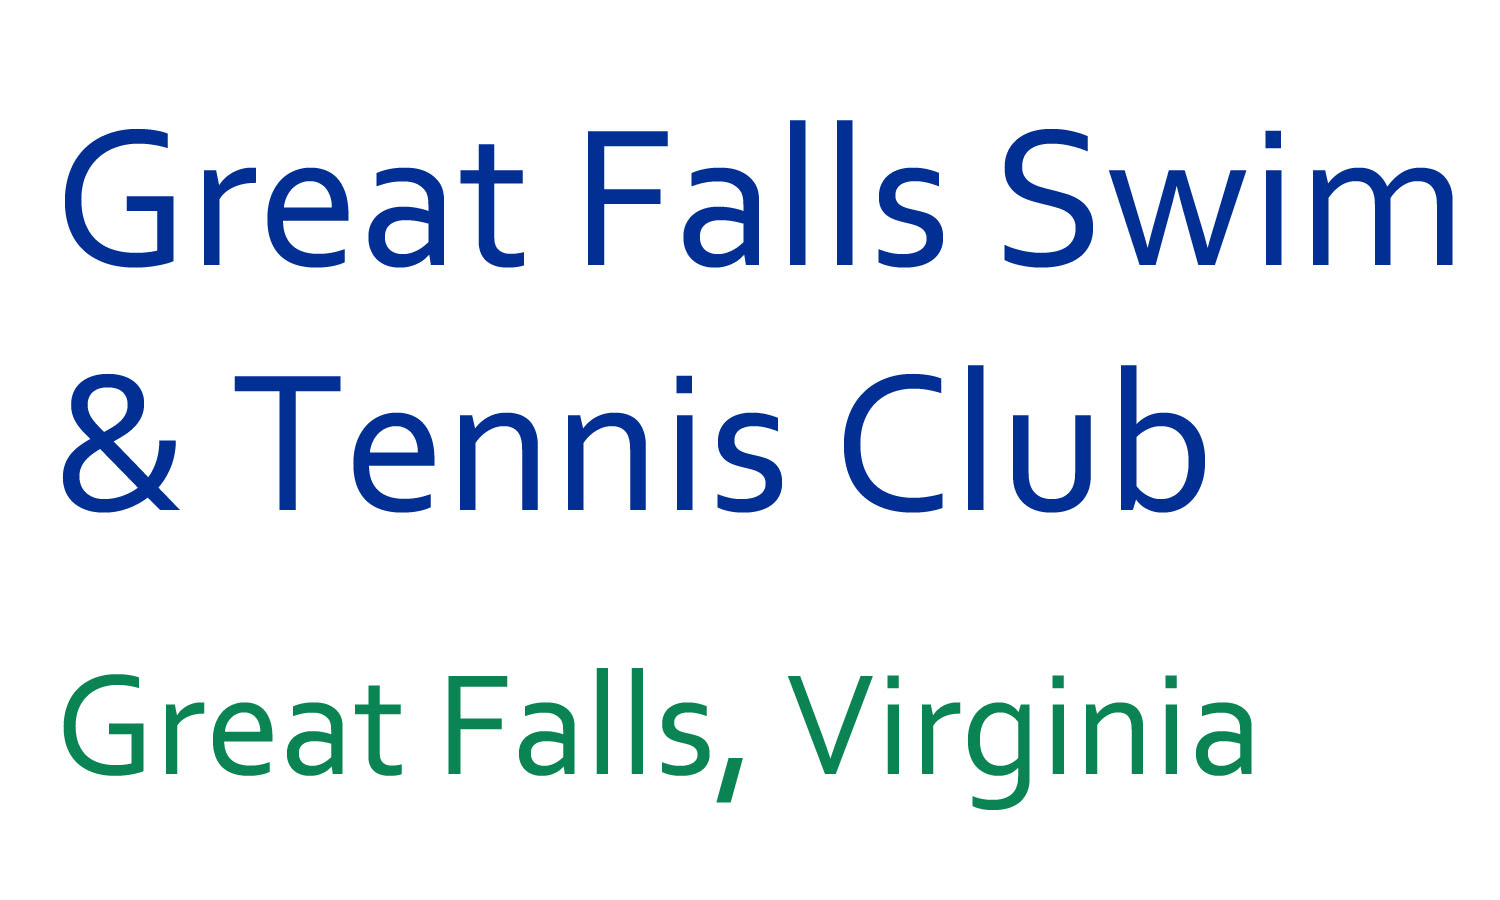 Great Falls Swim & Tennis